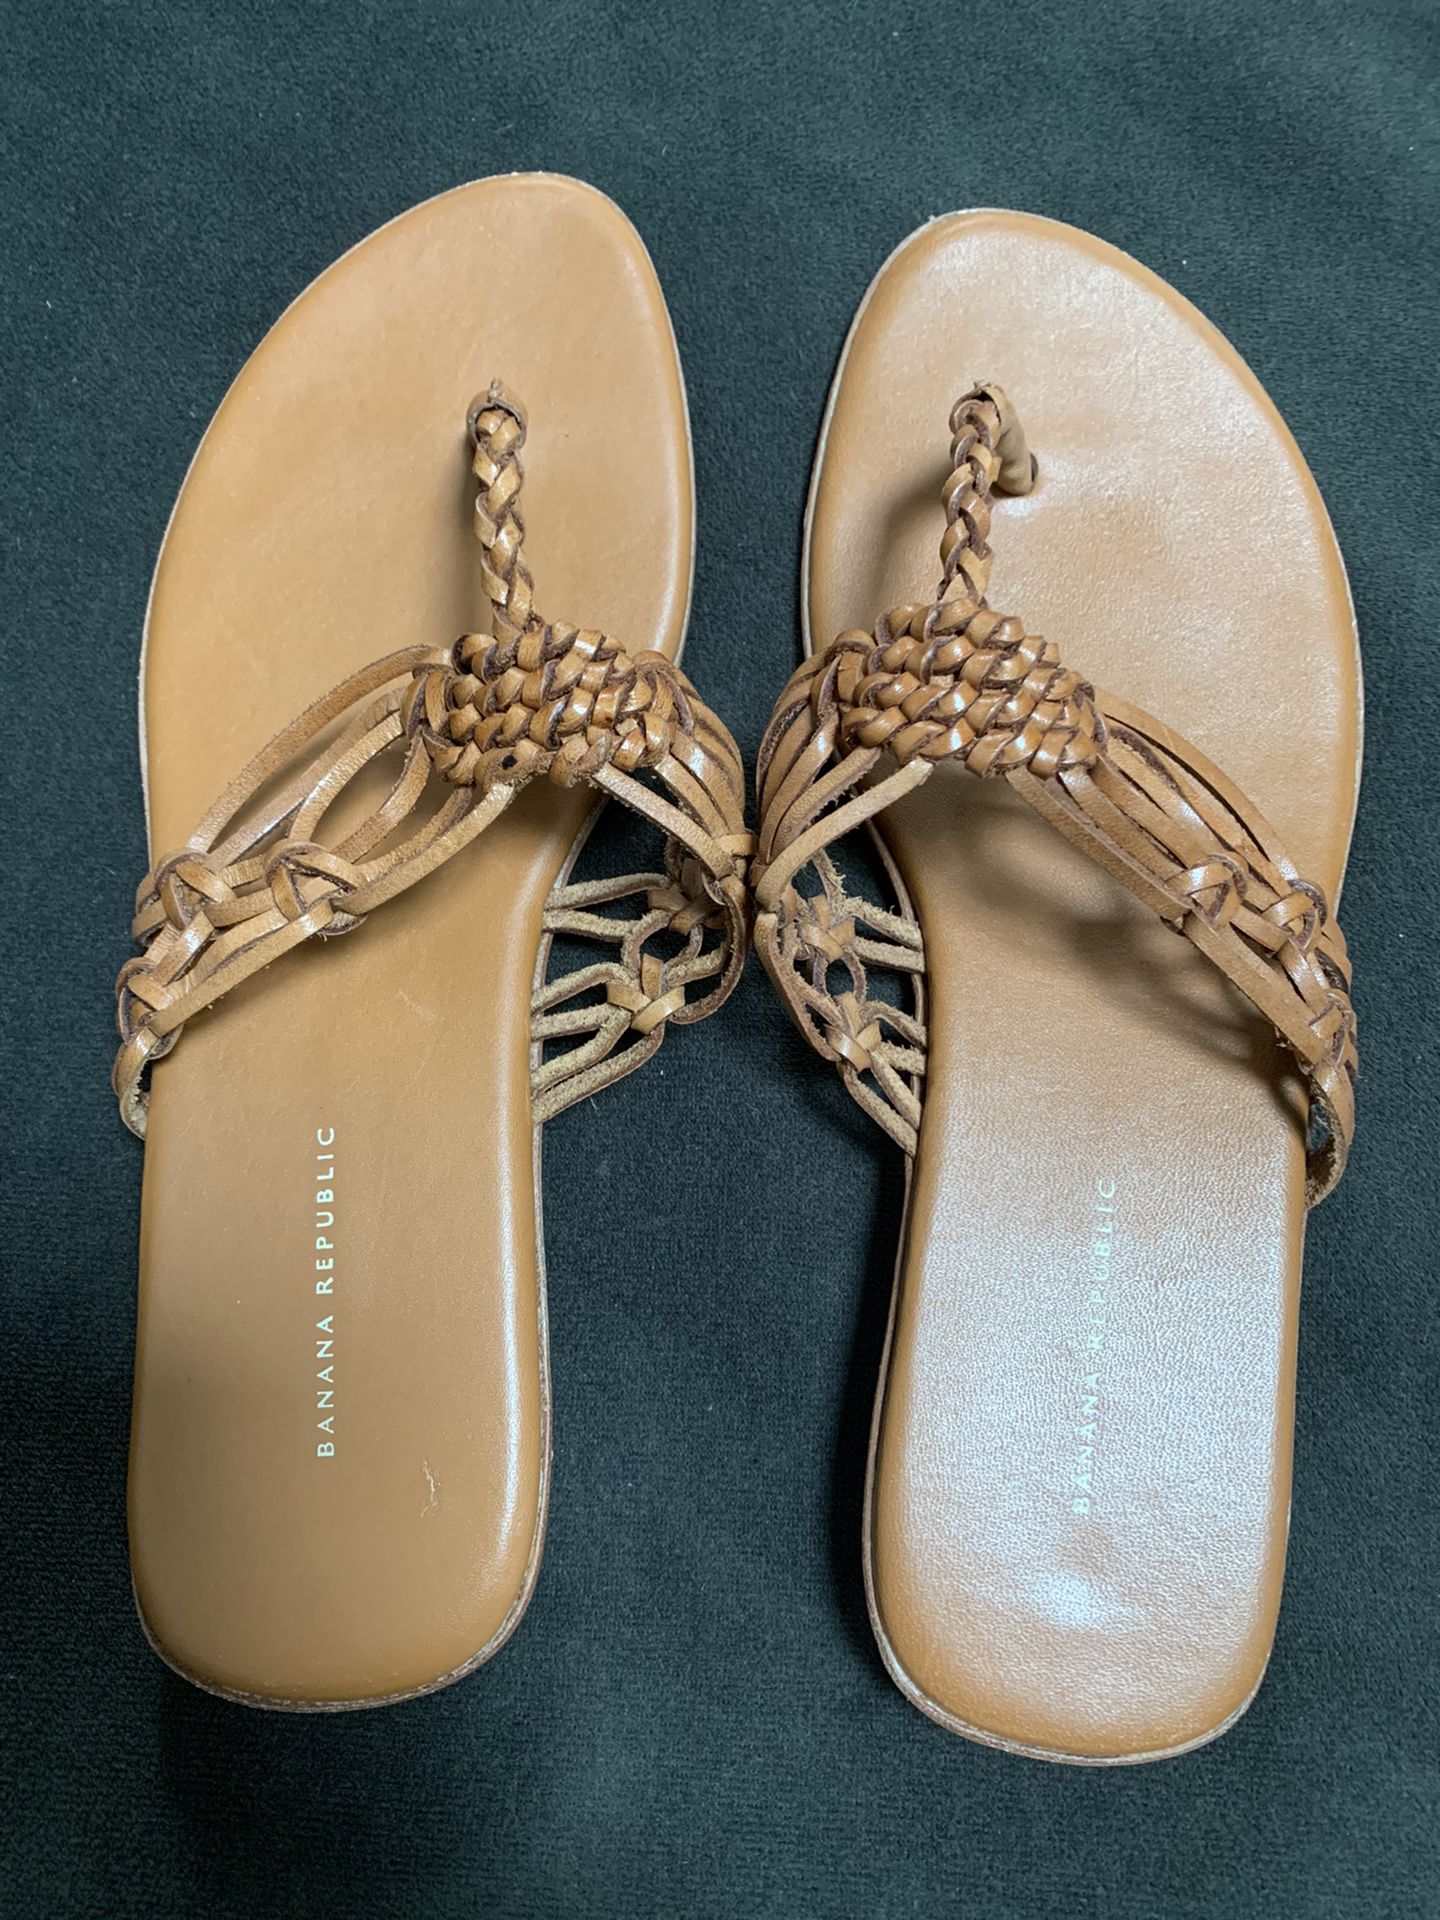 Banana republic leather strap sandals